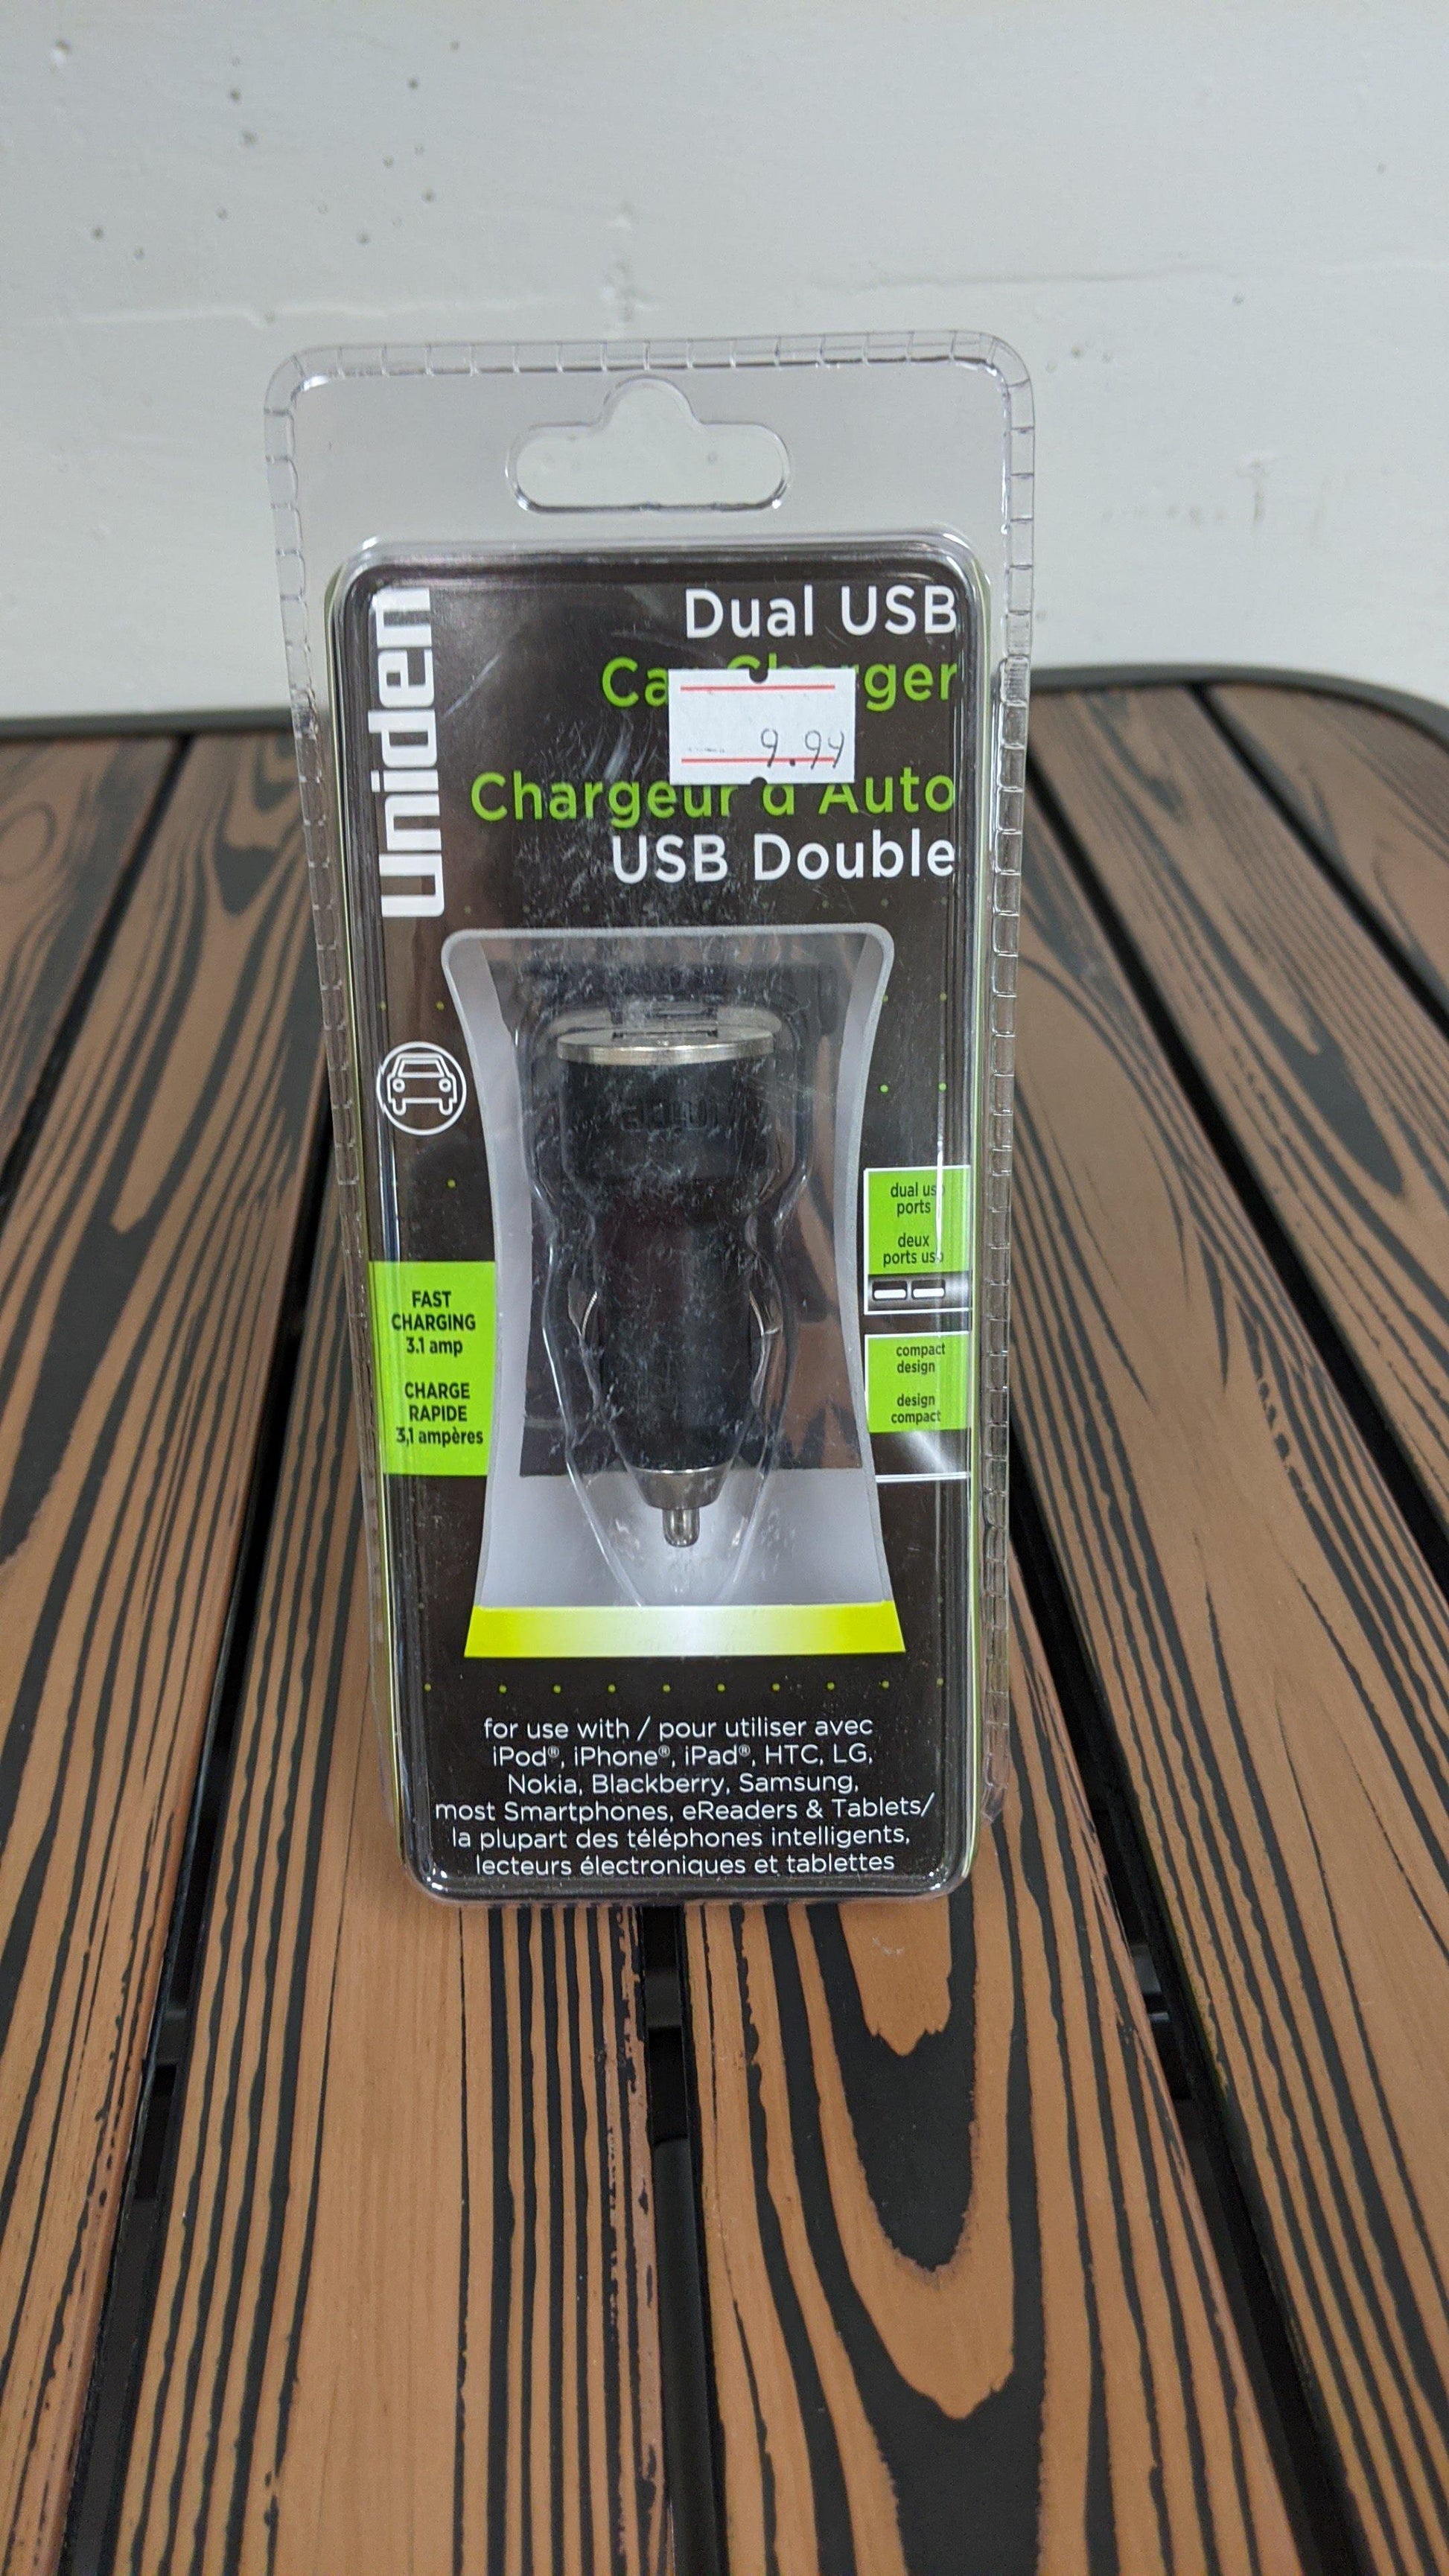 Undien Dual USB Car Charger - PCMaster Pro 